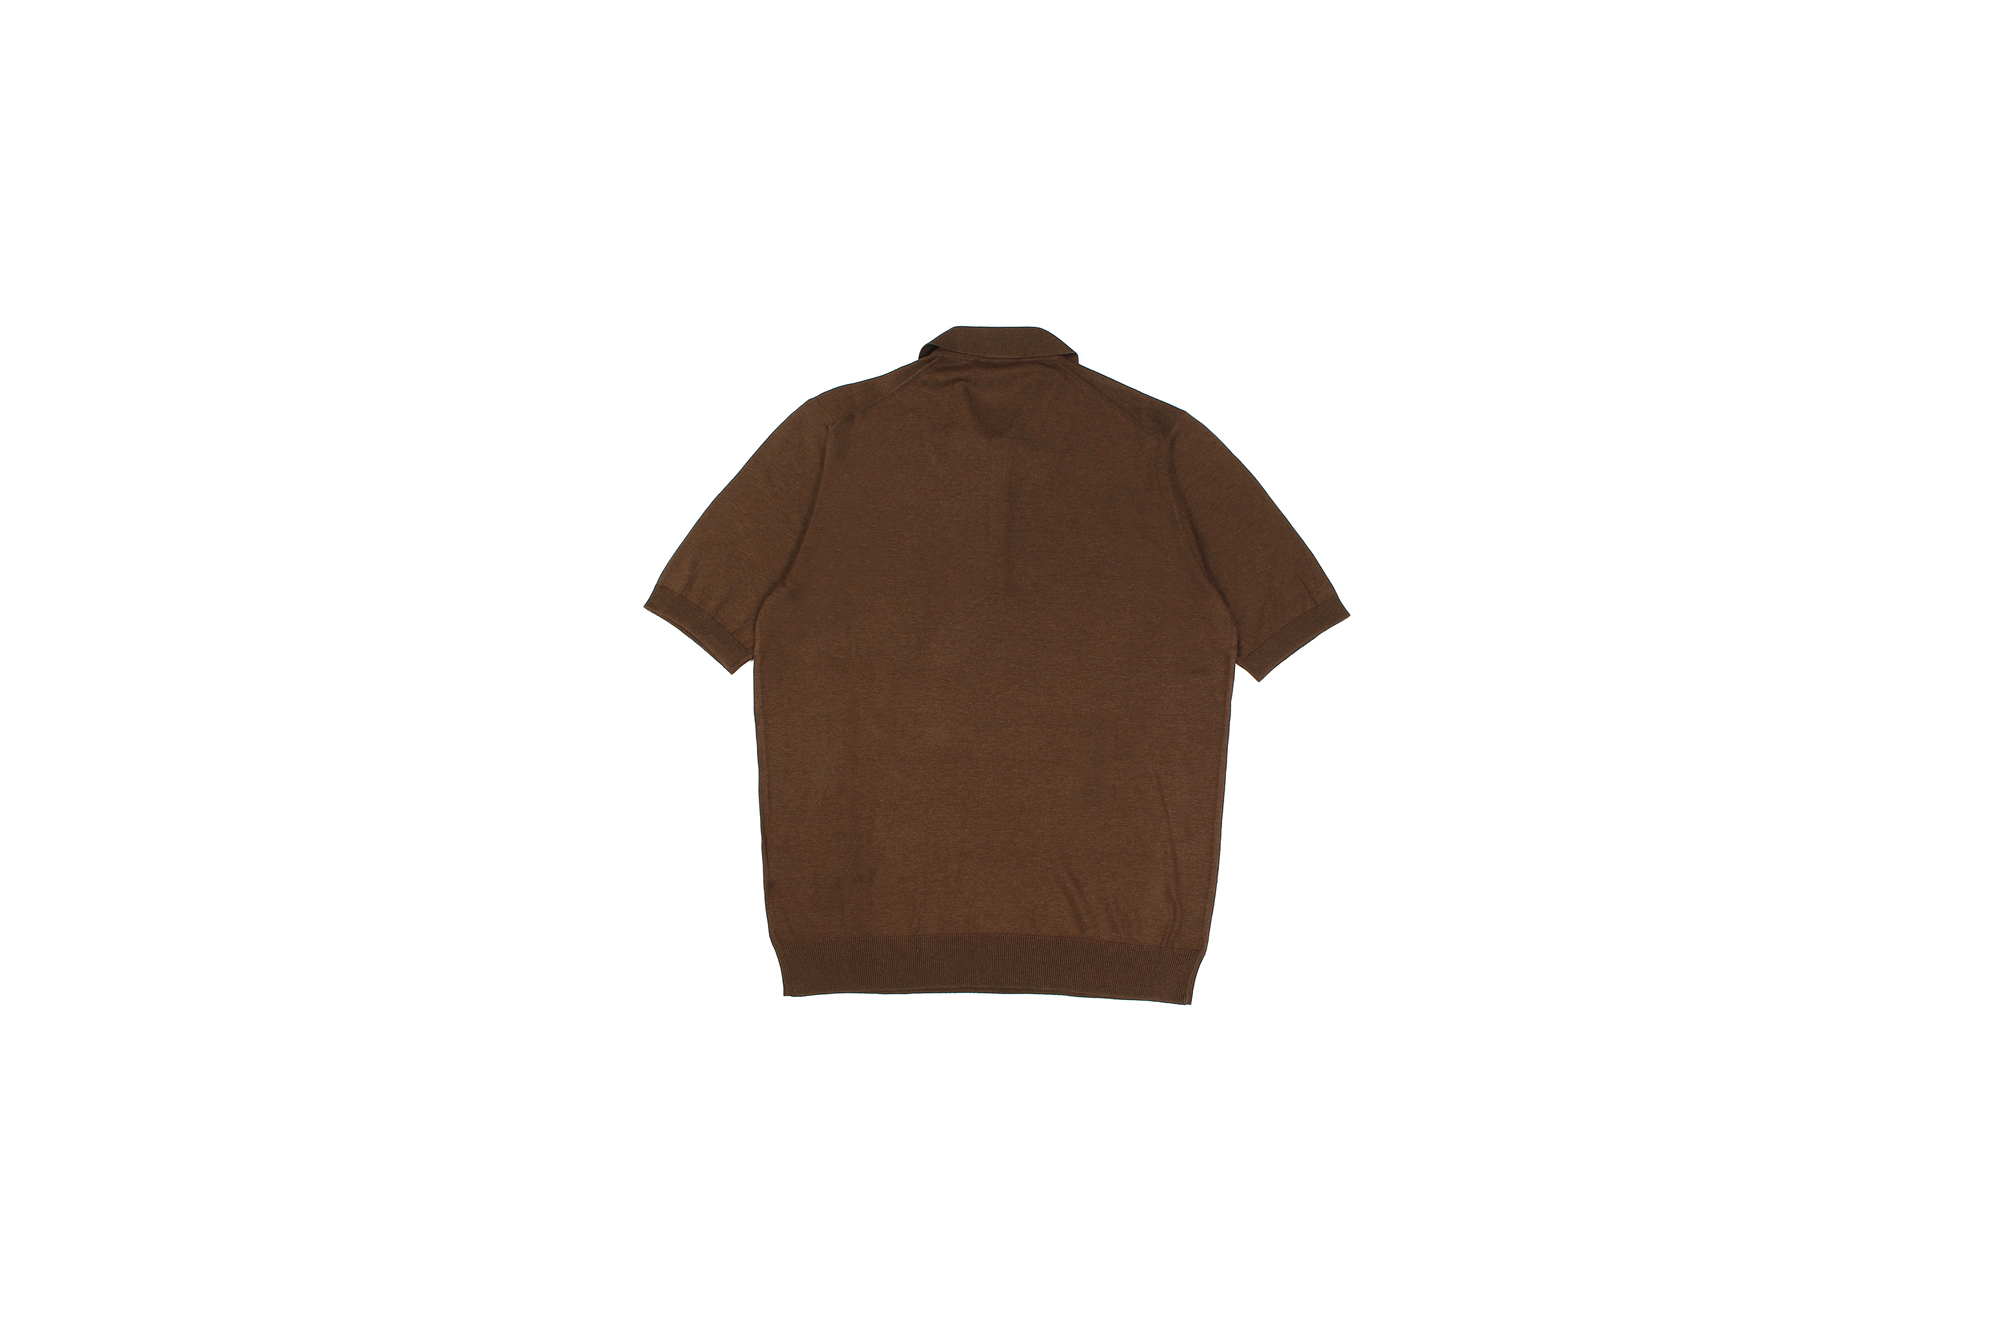 Gran Sasso (グランサッソ) Silk Knit Polo Shirt (シルクニットポロシャツ) SETA (シルク 100%) シルク ニット ポロシャツ GOLD (ゴールド・170) made in italy (イタリア製) 2020 春夏新作 【入荷しました】【フリー分発売開始】 愛知 名古屋 altoediritto アルトエデリット 